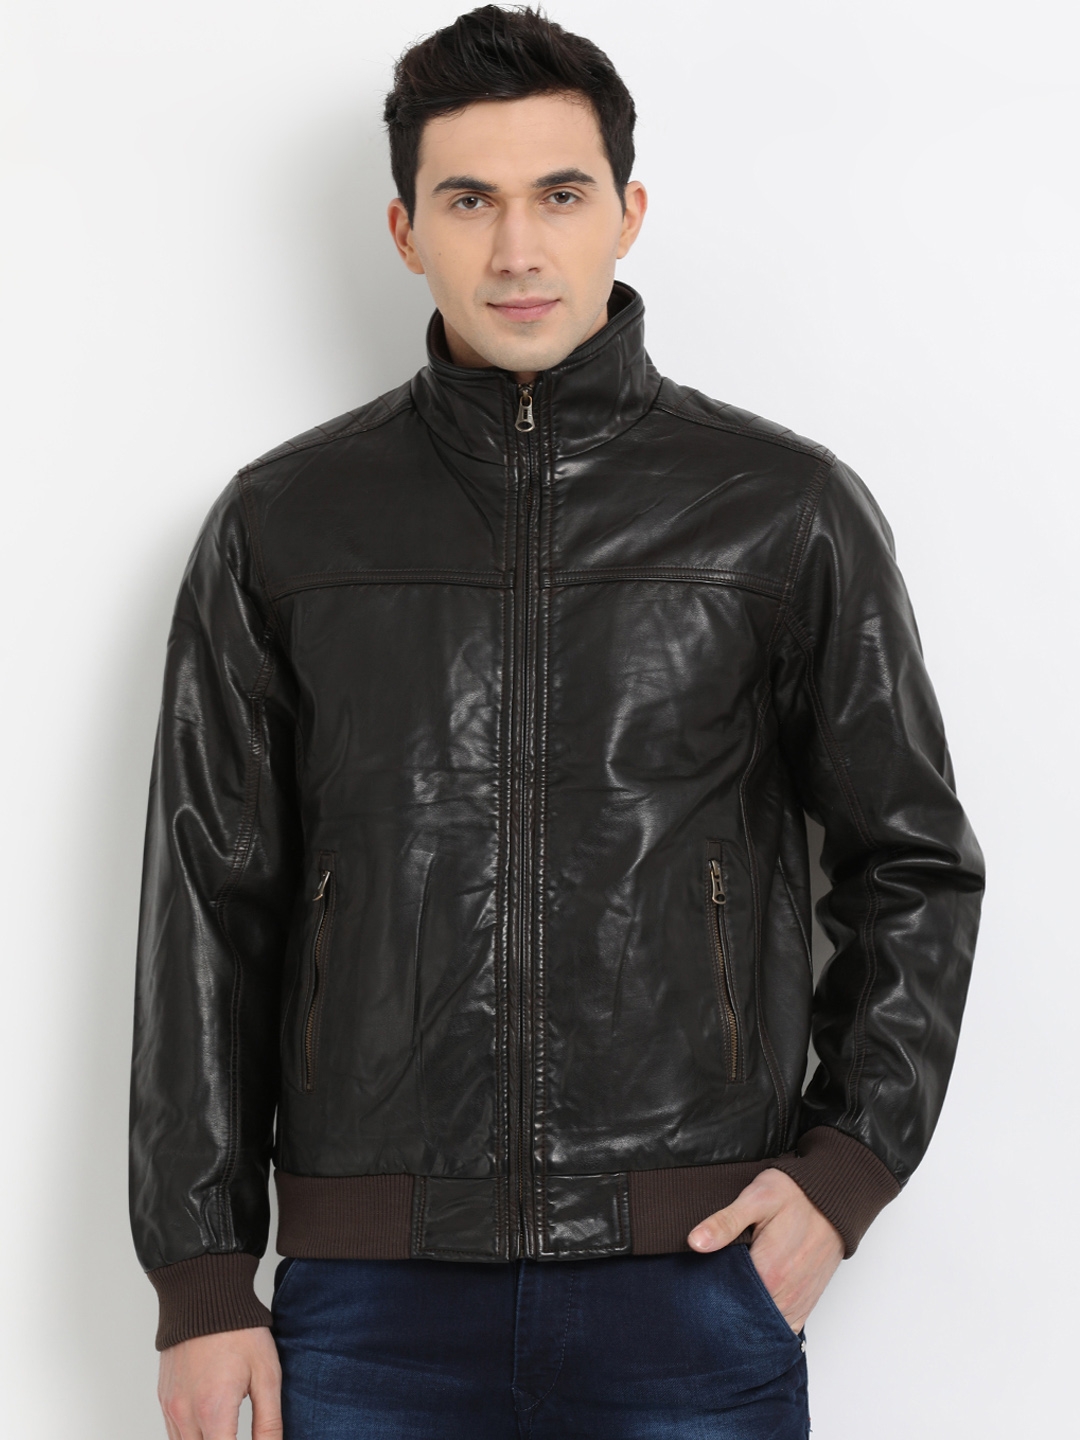 vintage 90s pepsi leather jacket mens xl | eBay